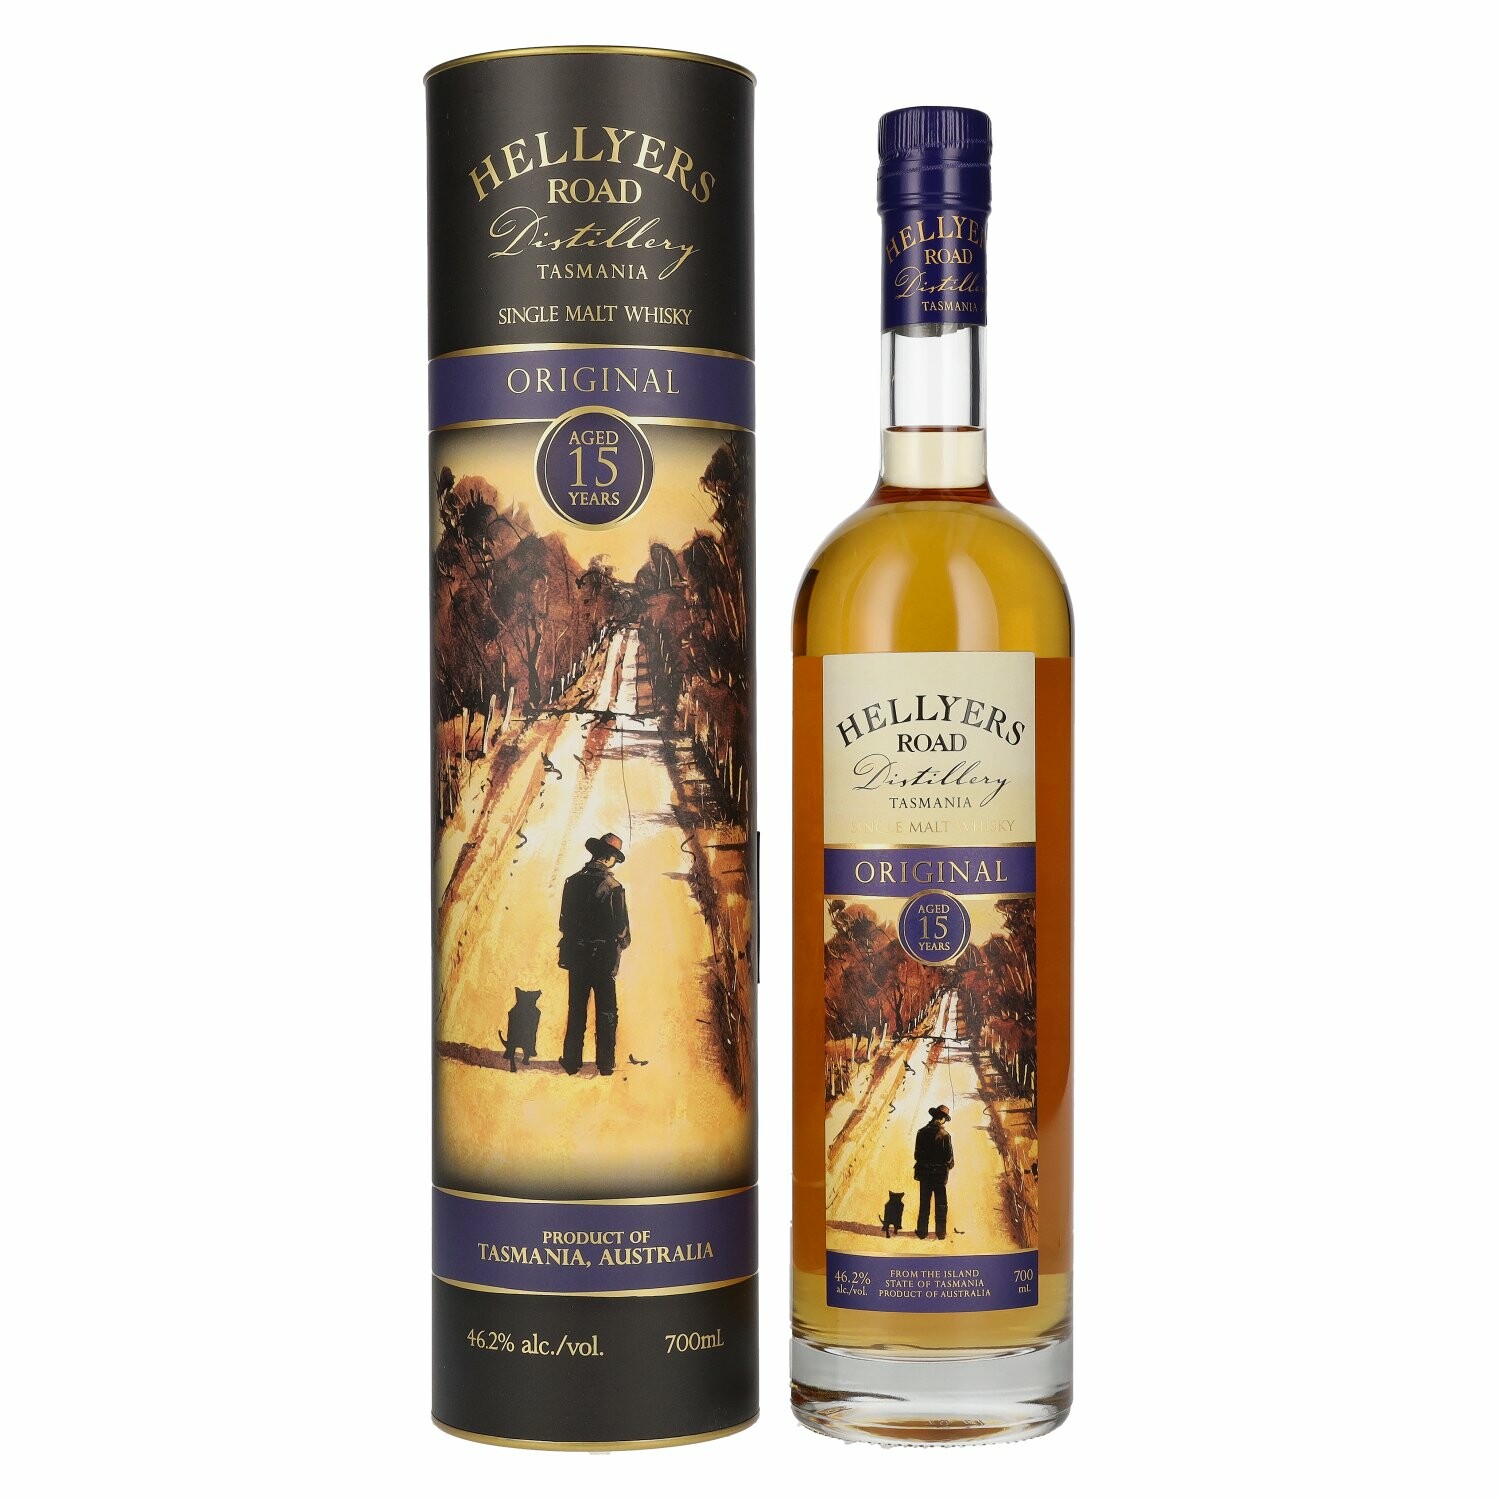 Hellyers Road ORIGINAL 15 Years Old Tasmania Single Malt Whisky 46,2% Vol. 0,7l in Giftbox